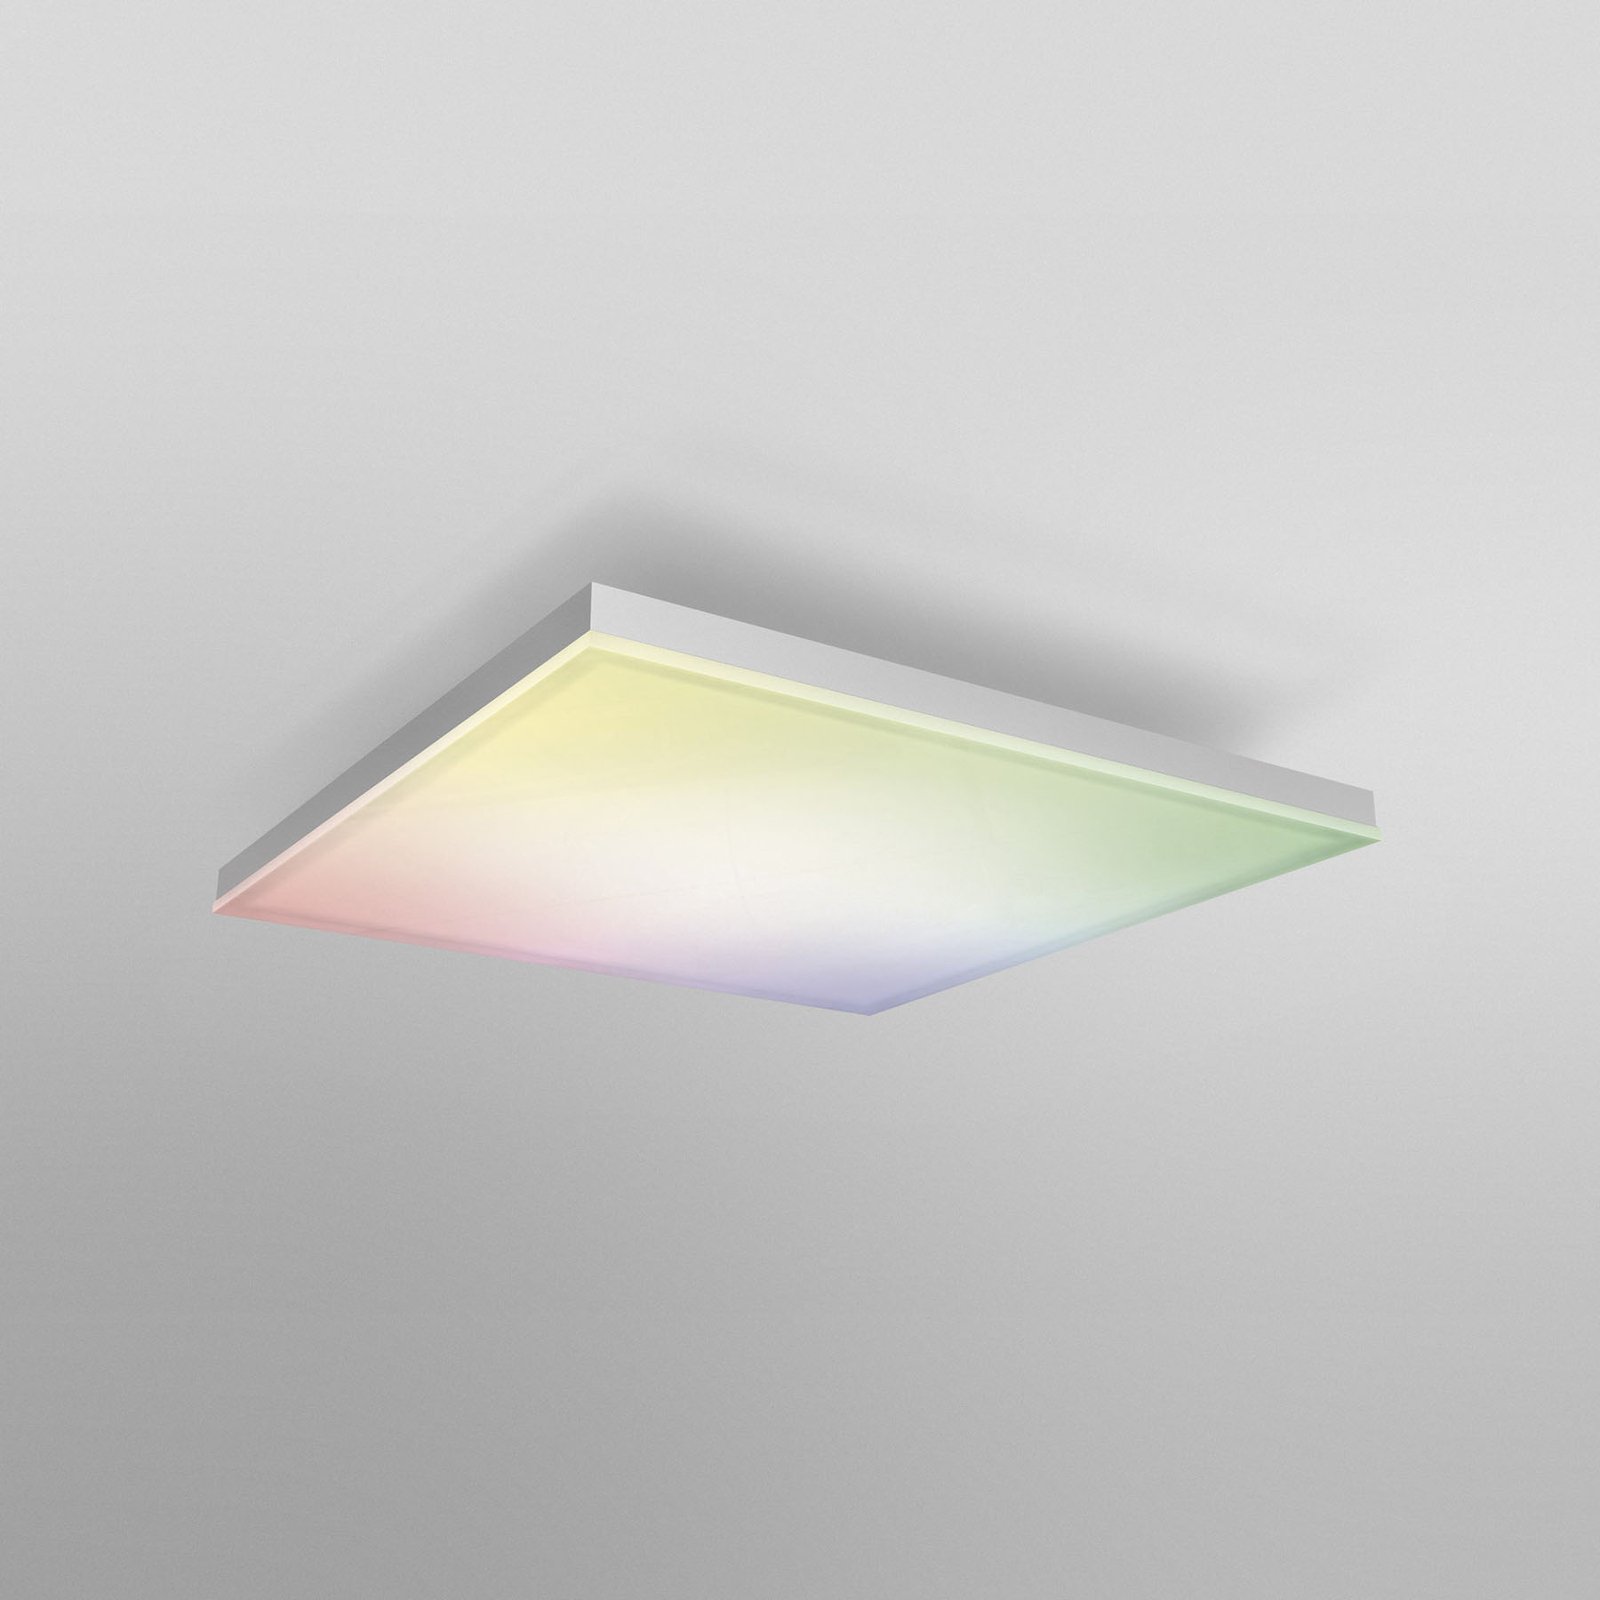 LEDVANCE SMART+ WiFi Planon panneau RGBW 30x30cm